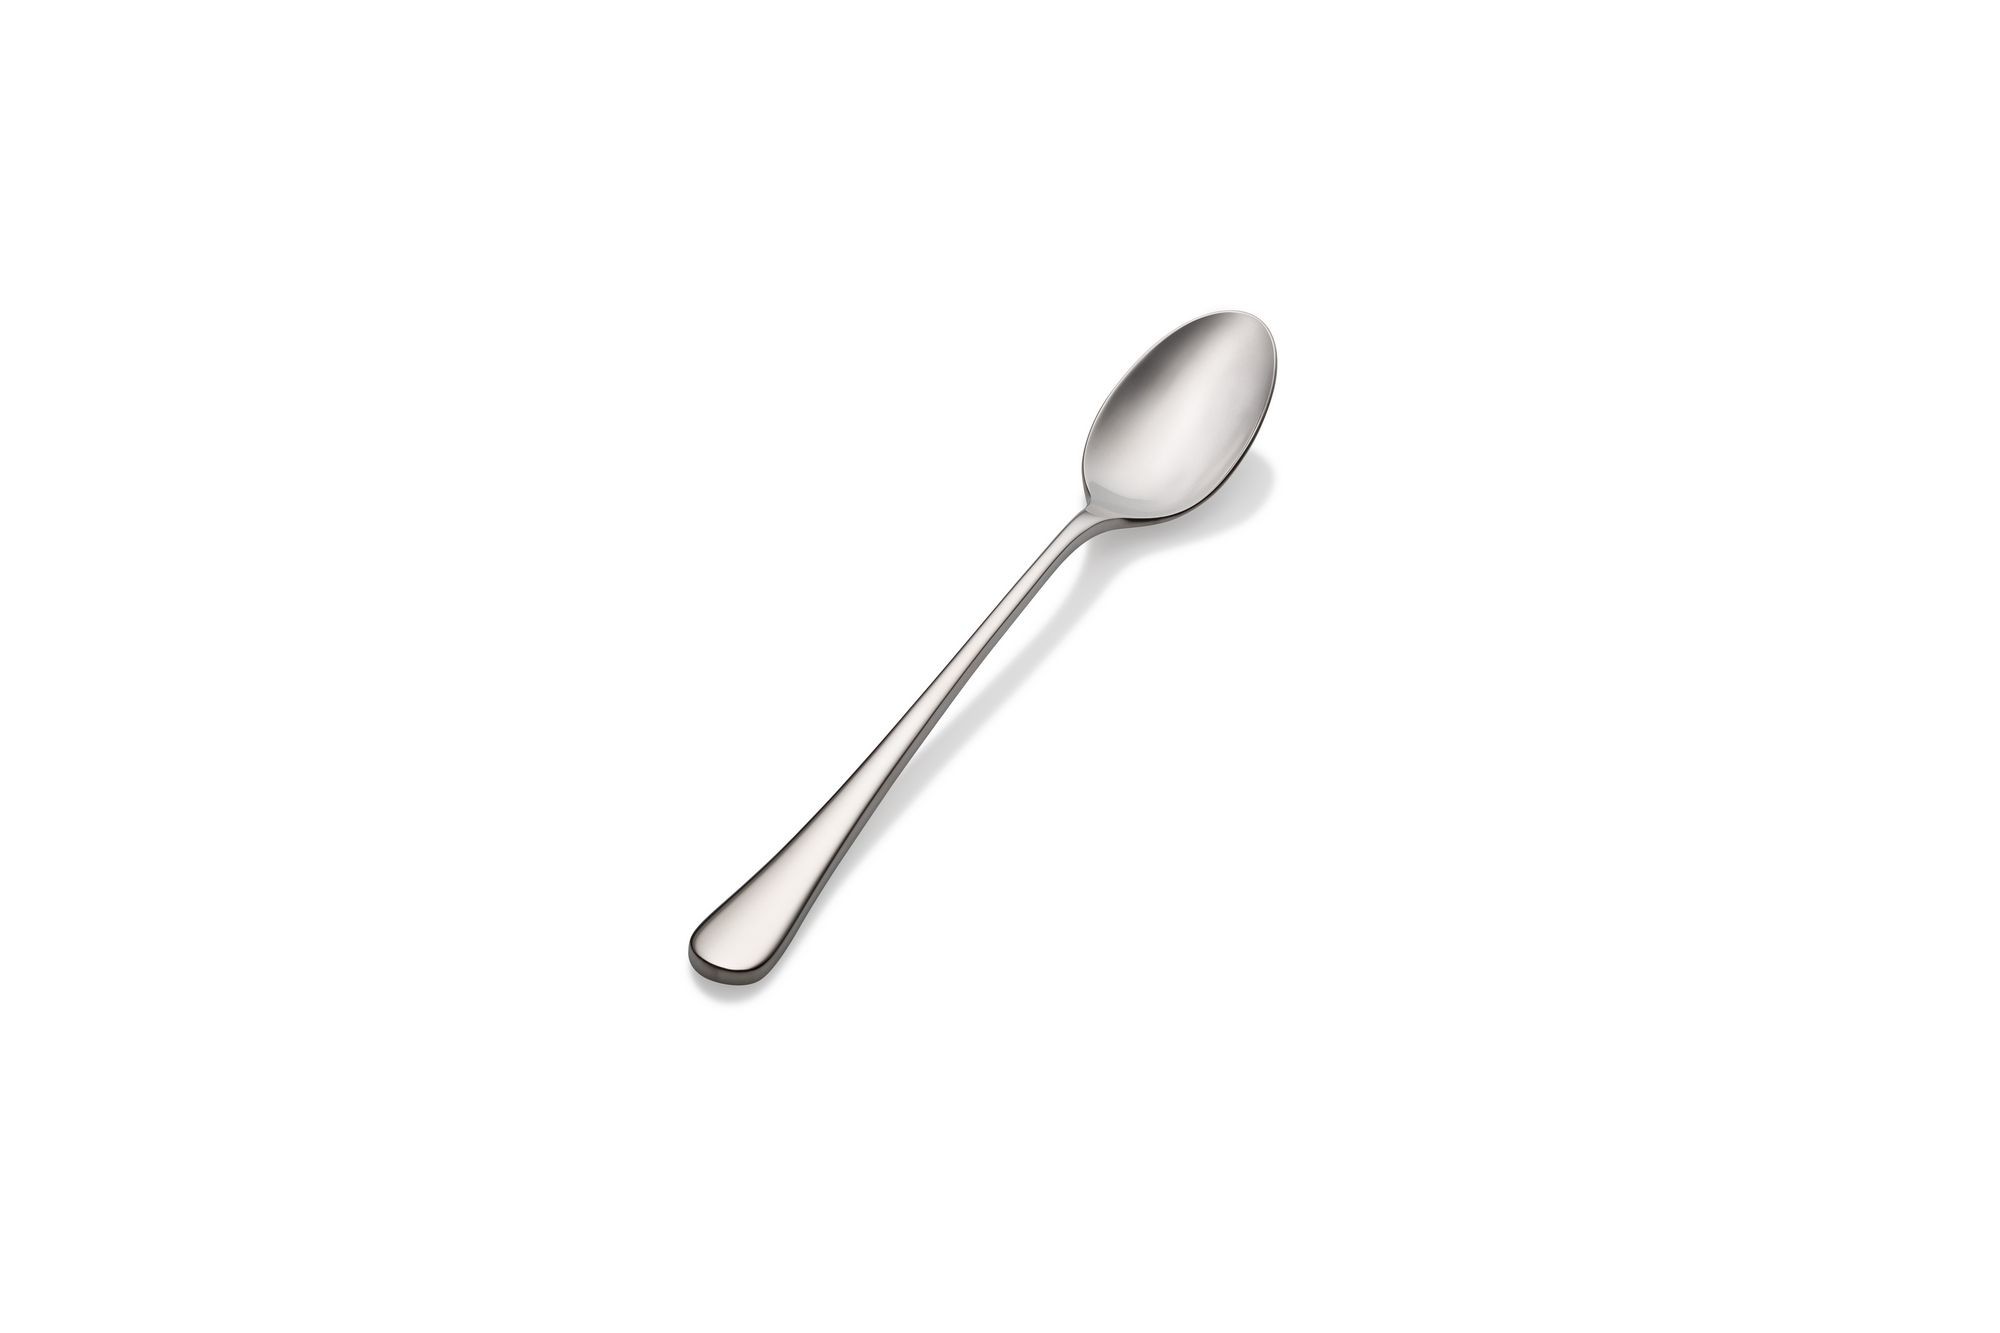 Bon Chef S4002 Como 18/8 Stainless Steel Iced Tea Spoon